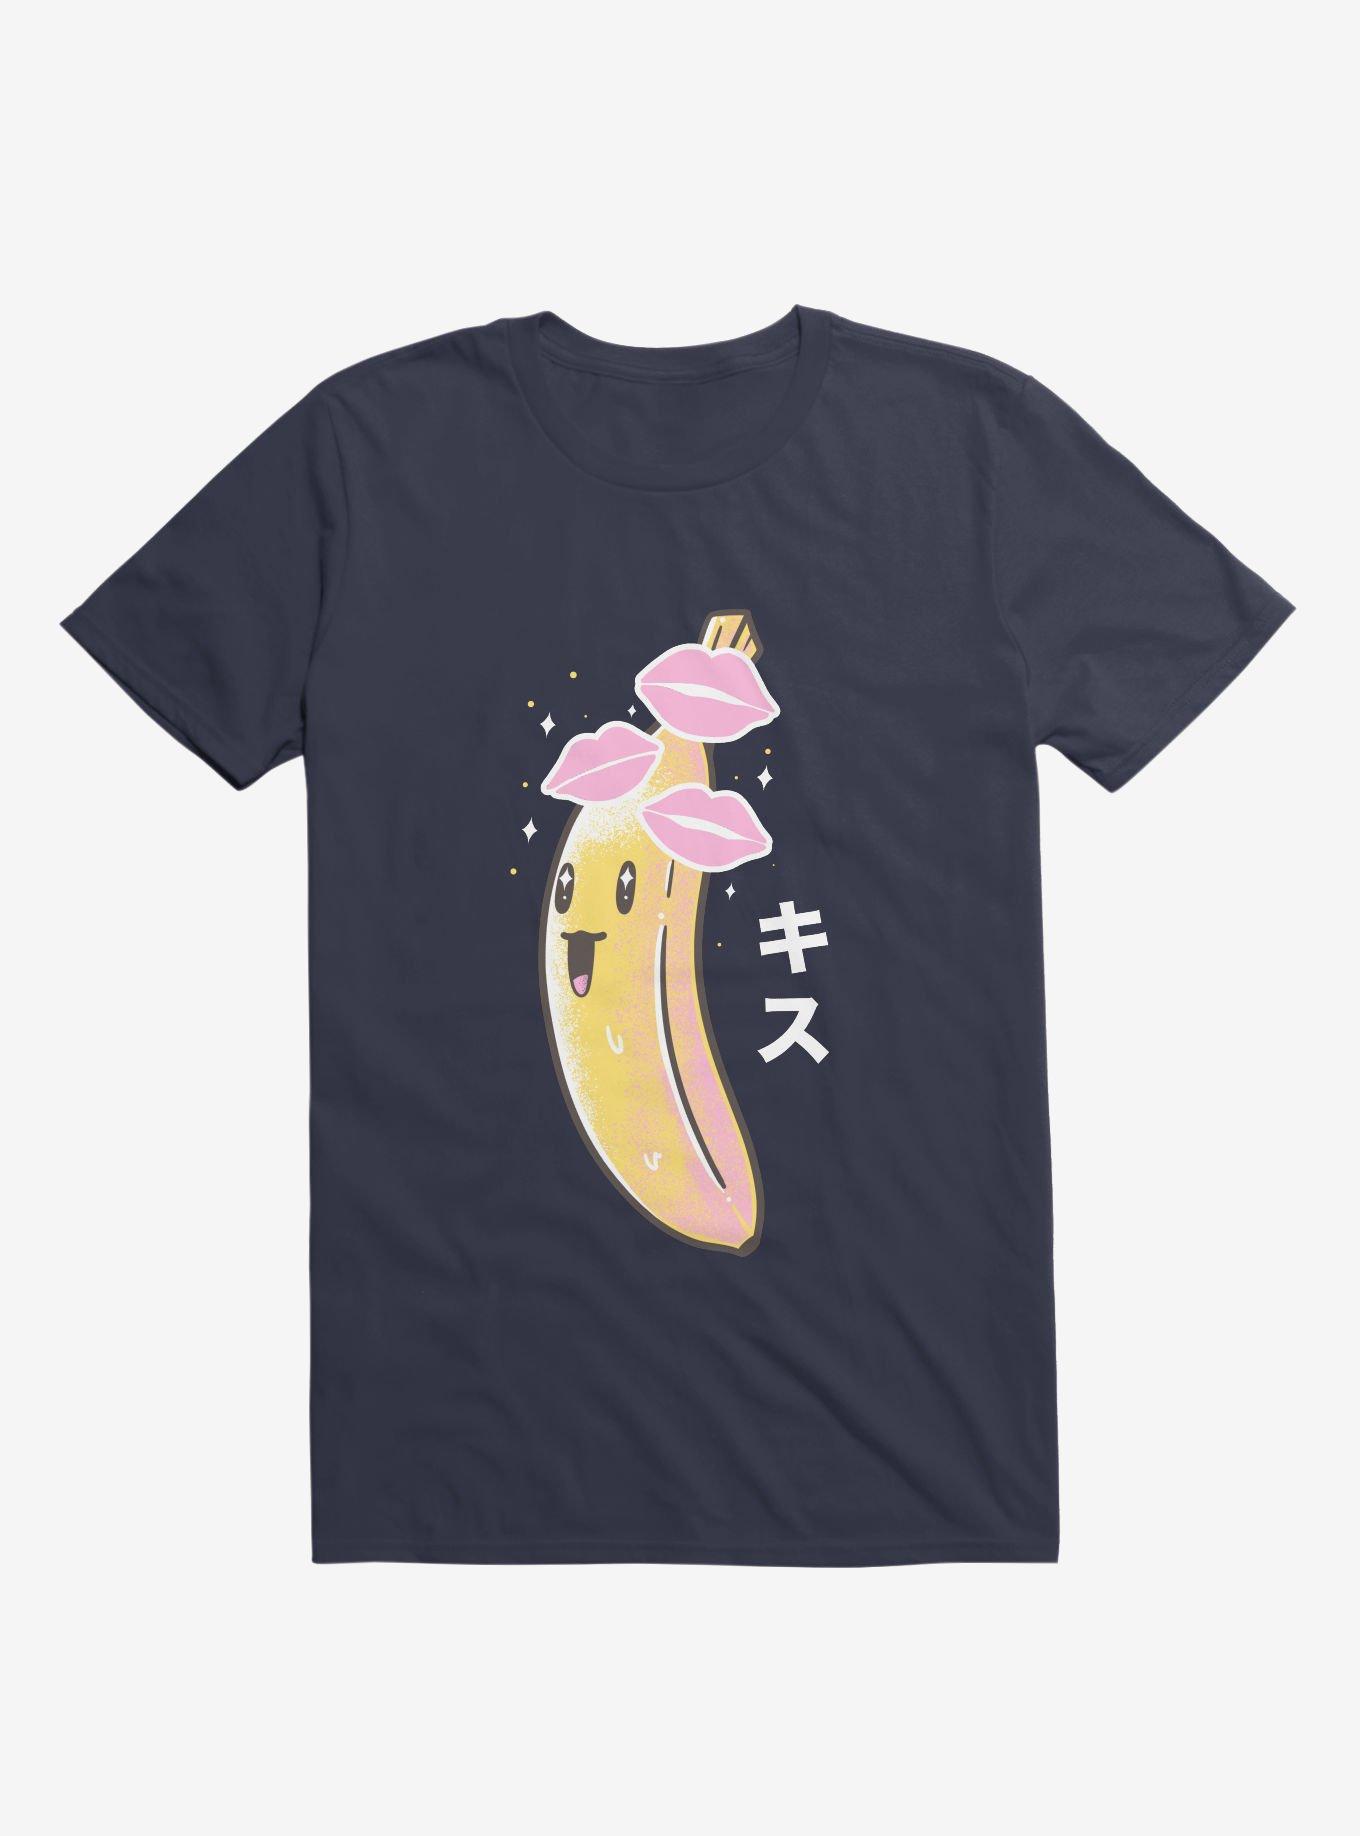 Banana Kisses Navy Blue T-Shirt